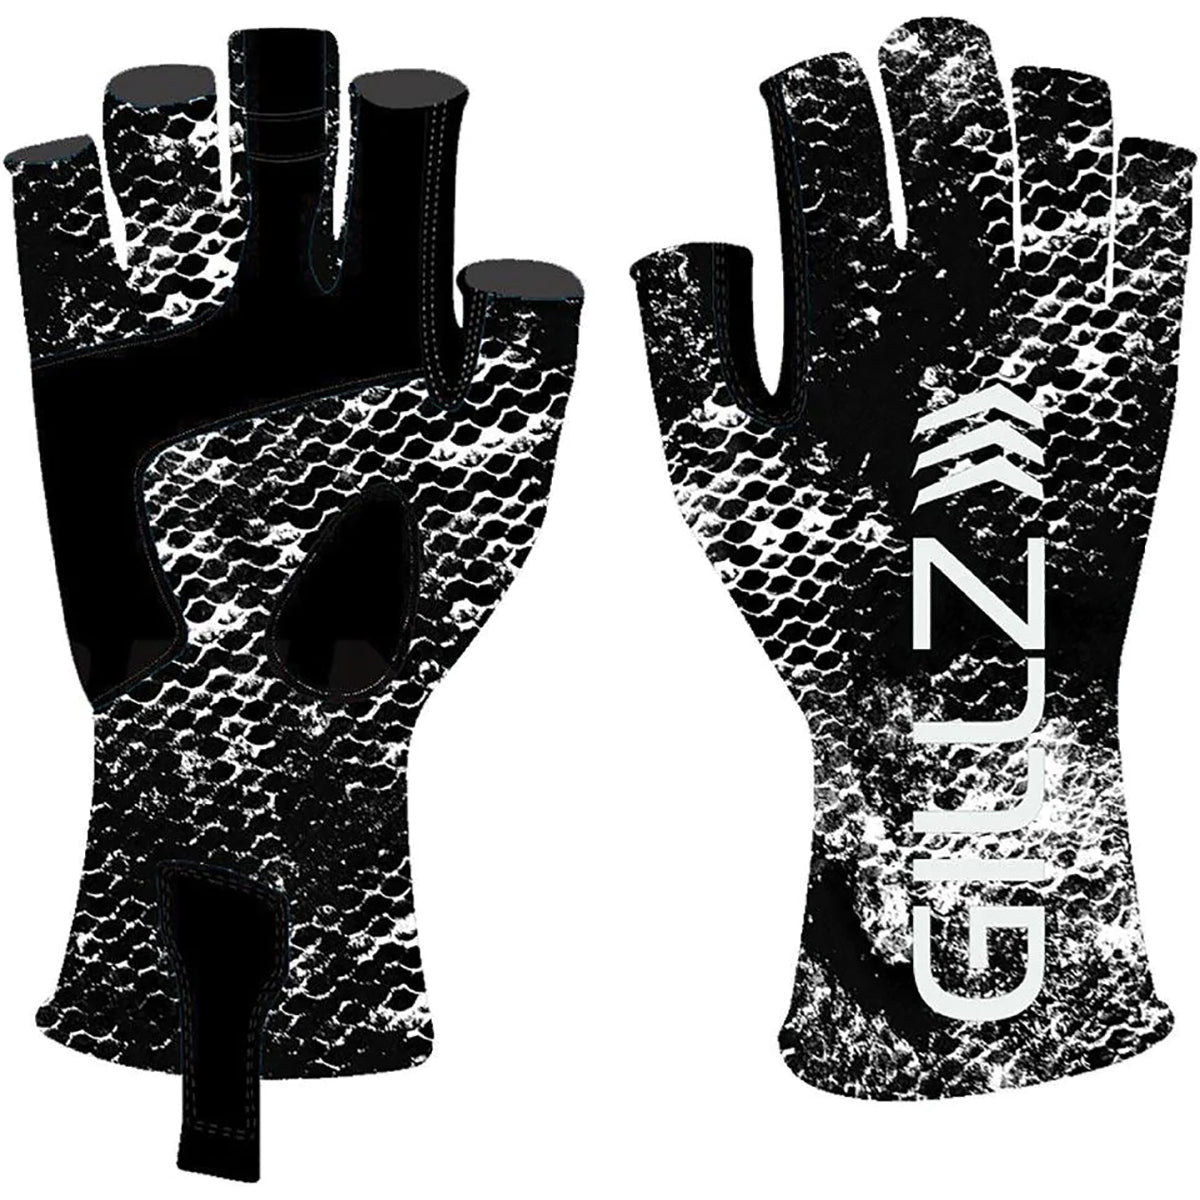 Gillz Fishing Gloves - Black Gillz